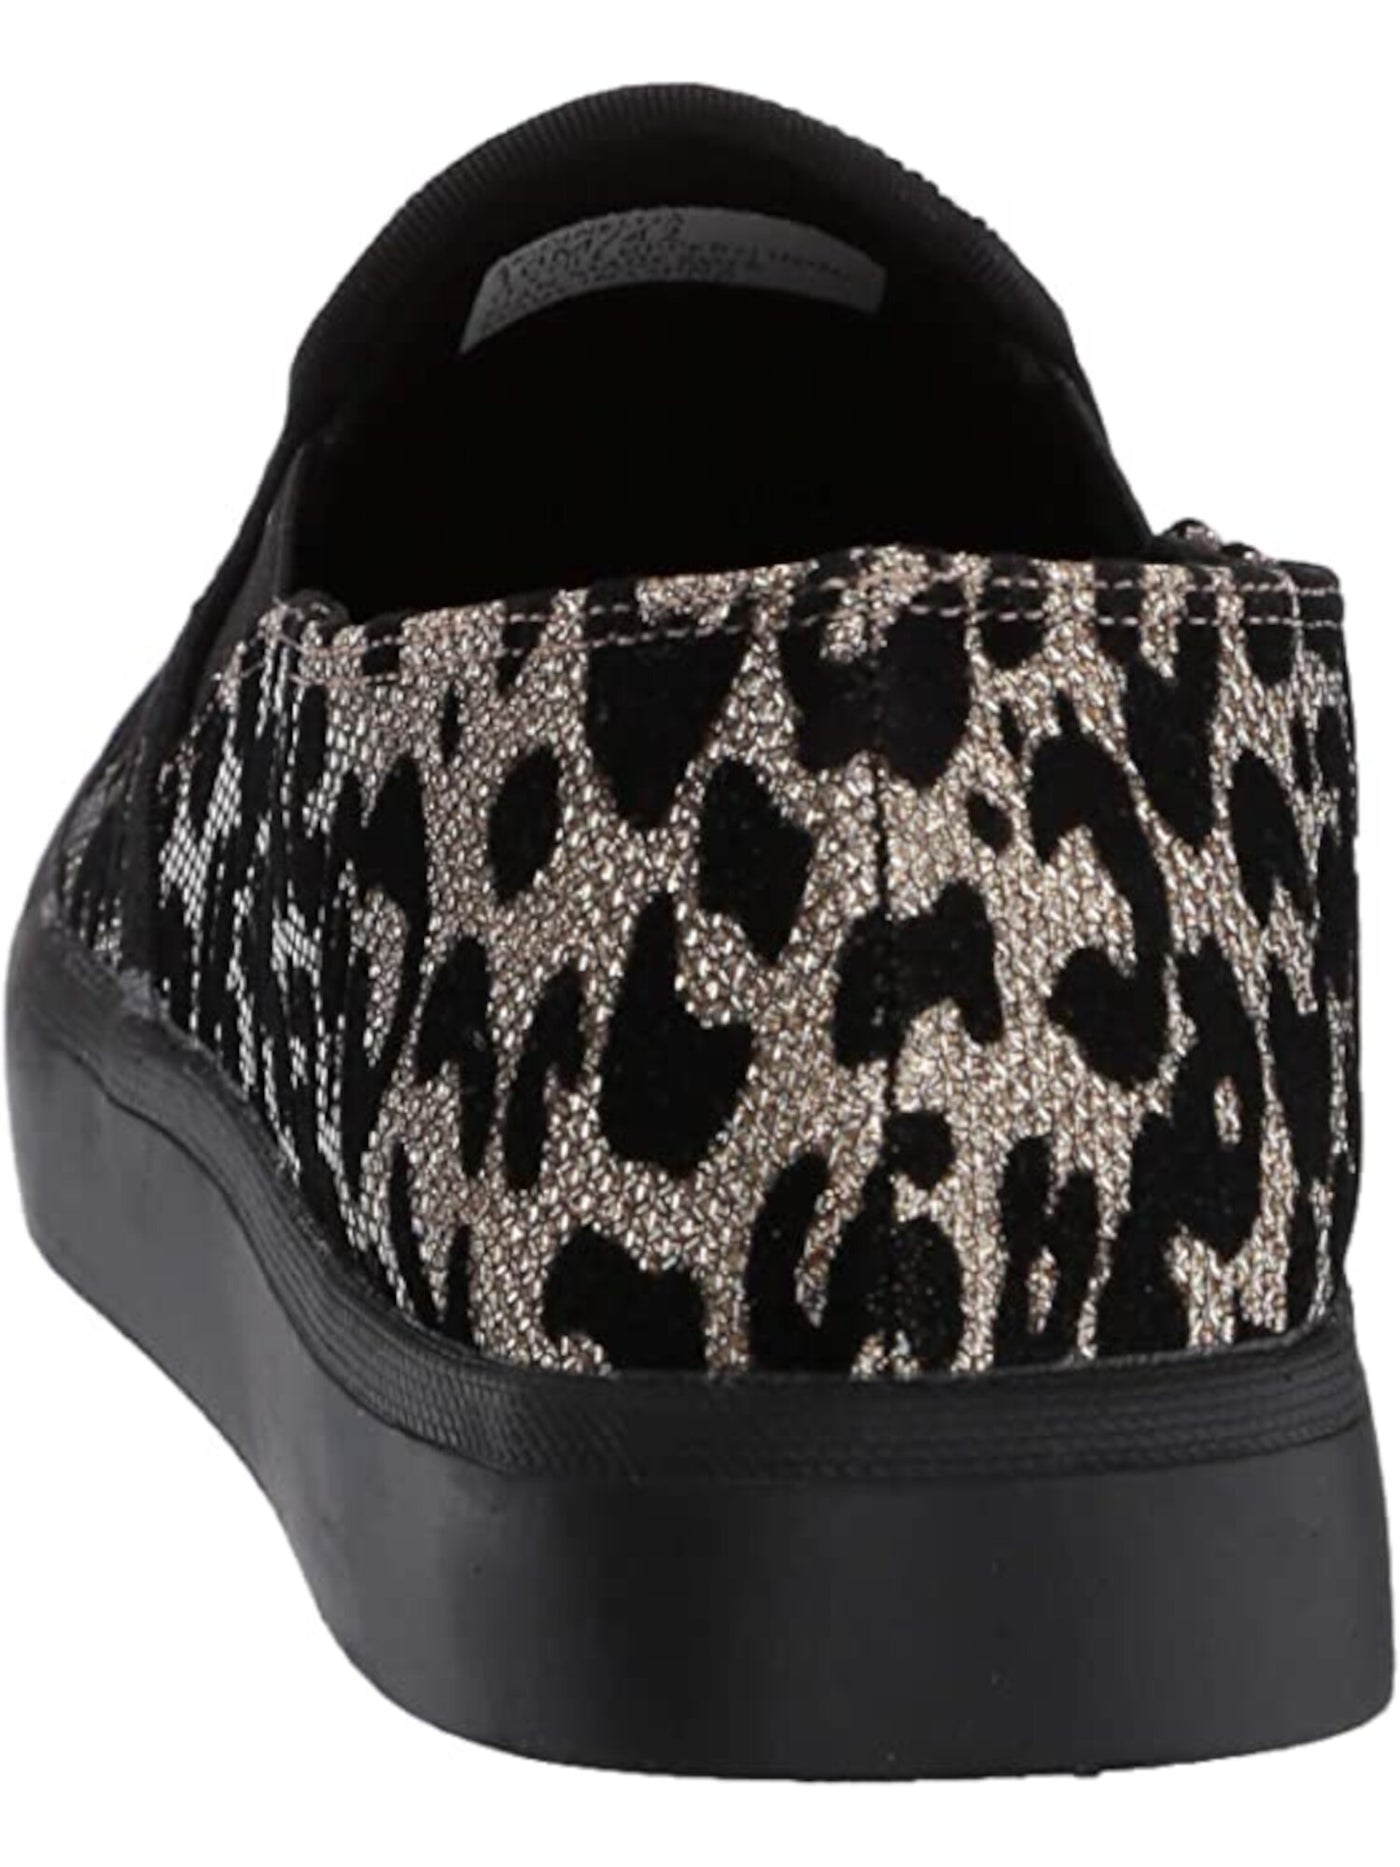 JESSICA SIMPSON Womens Black Leopard Print Side Gore Cushioned Dinellia Round Toe Platform Slip On Flats Shoes 5 M